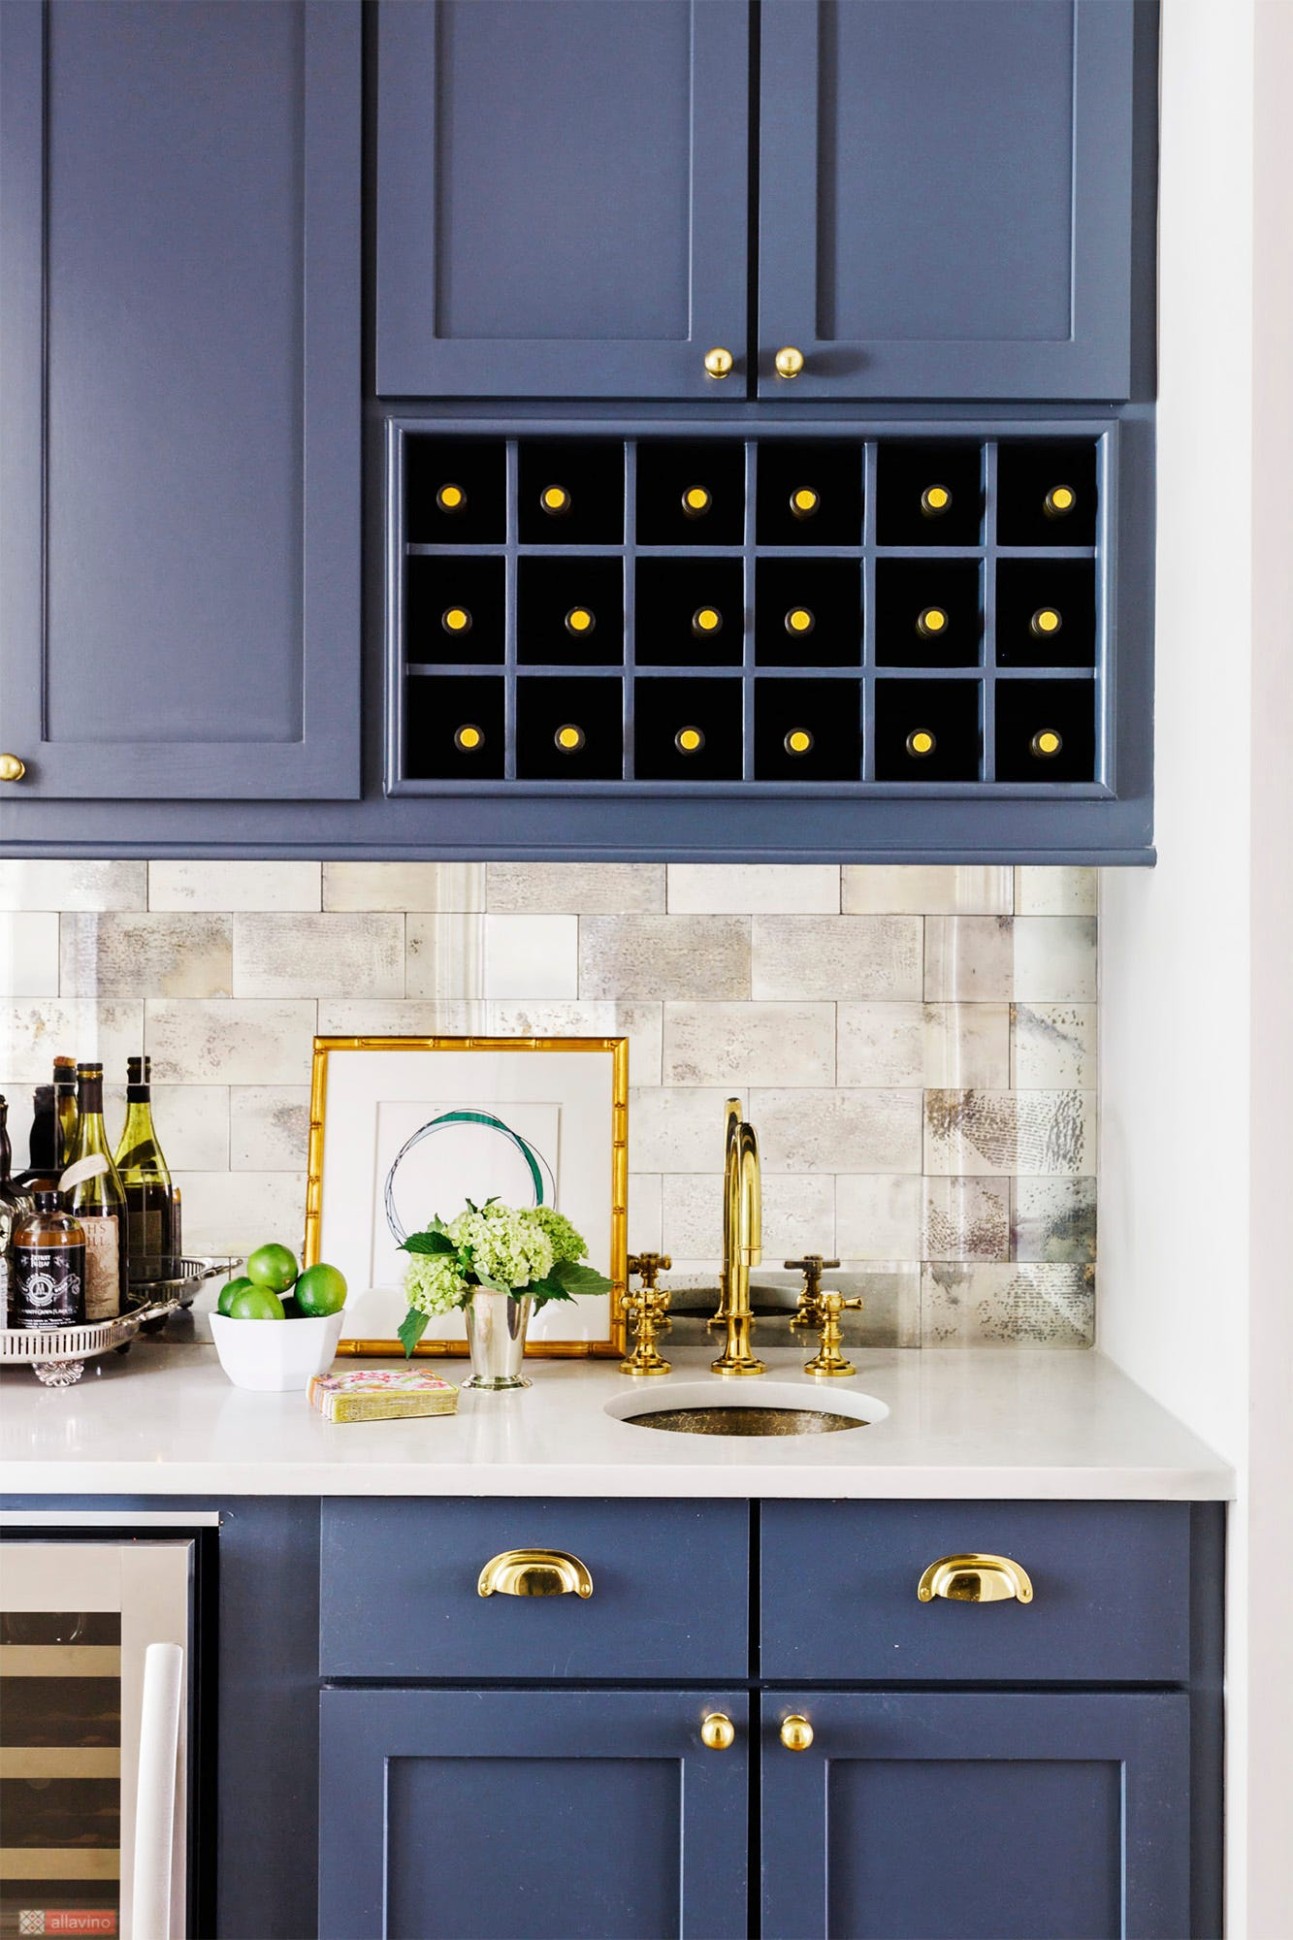 6 Best Small Kitchen Design Ideas - Tiny Kitchen Decorating - modern kitchen design small spaces